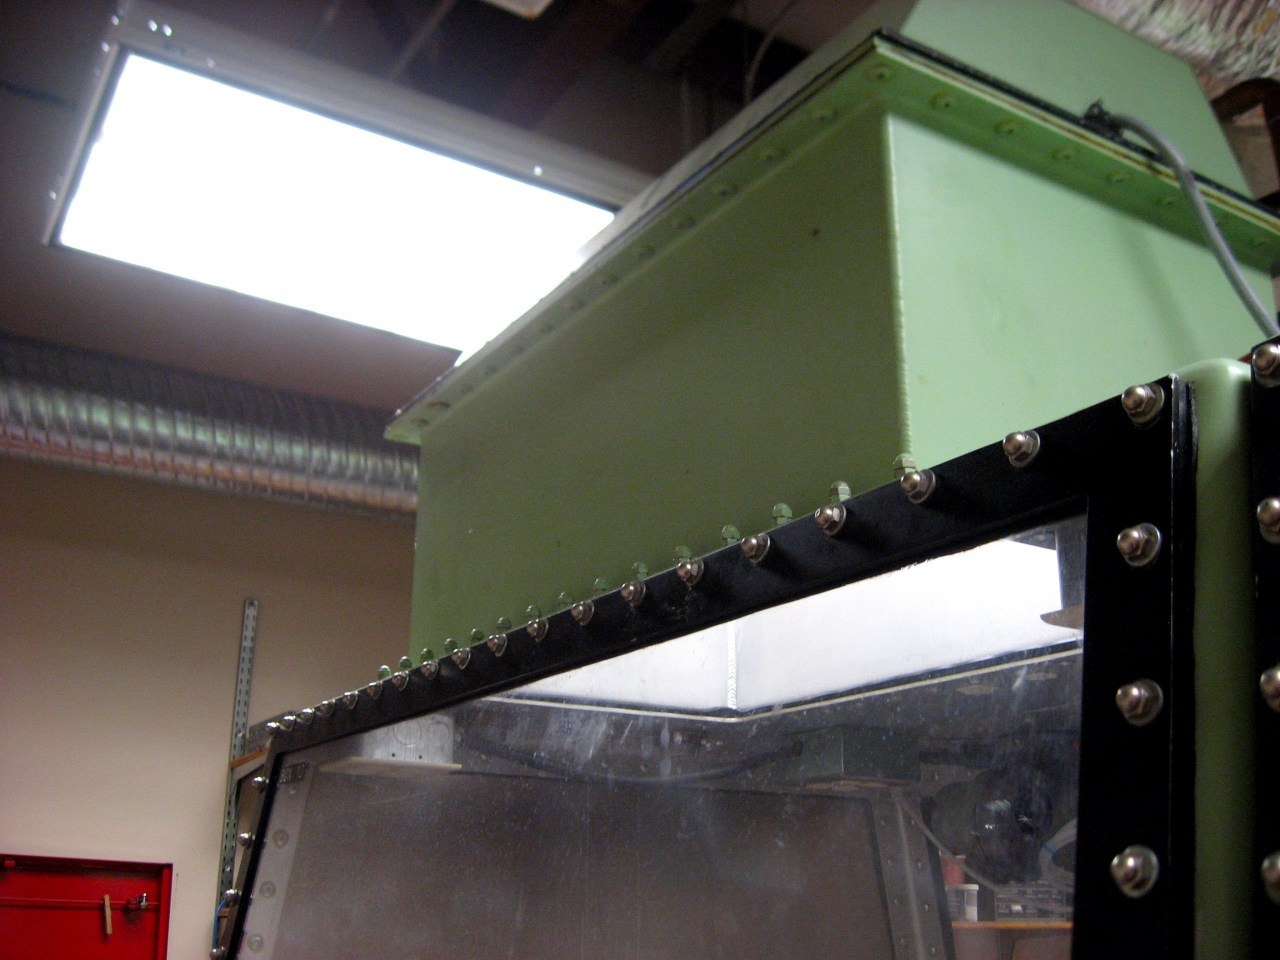 The top of the HE-43 Dri-Lab glove box.